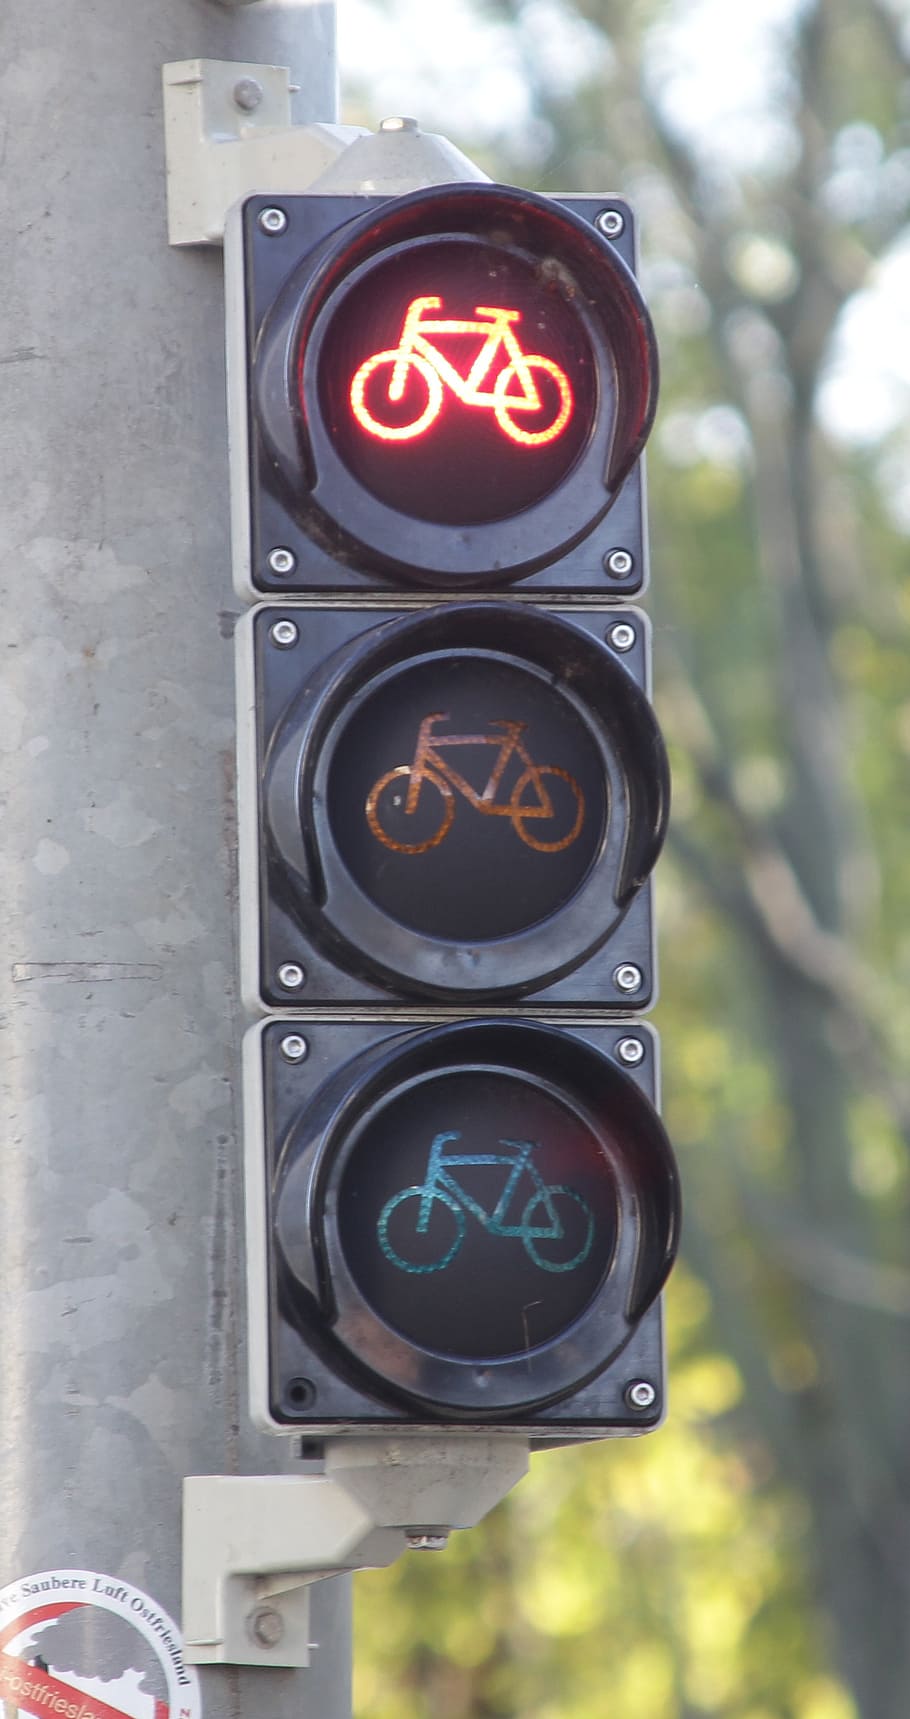 bike lights, traffic lights, red, traffic signal, light signal, traffic, red light, road, stop, cyclists